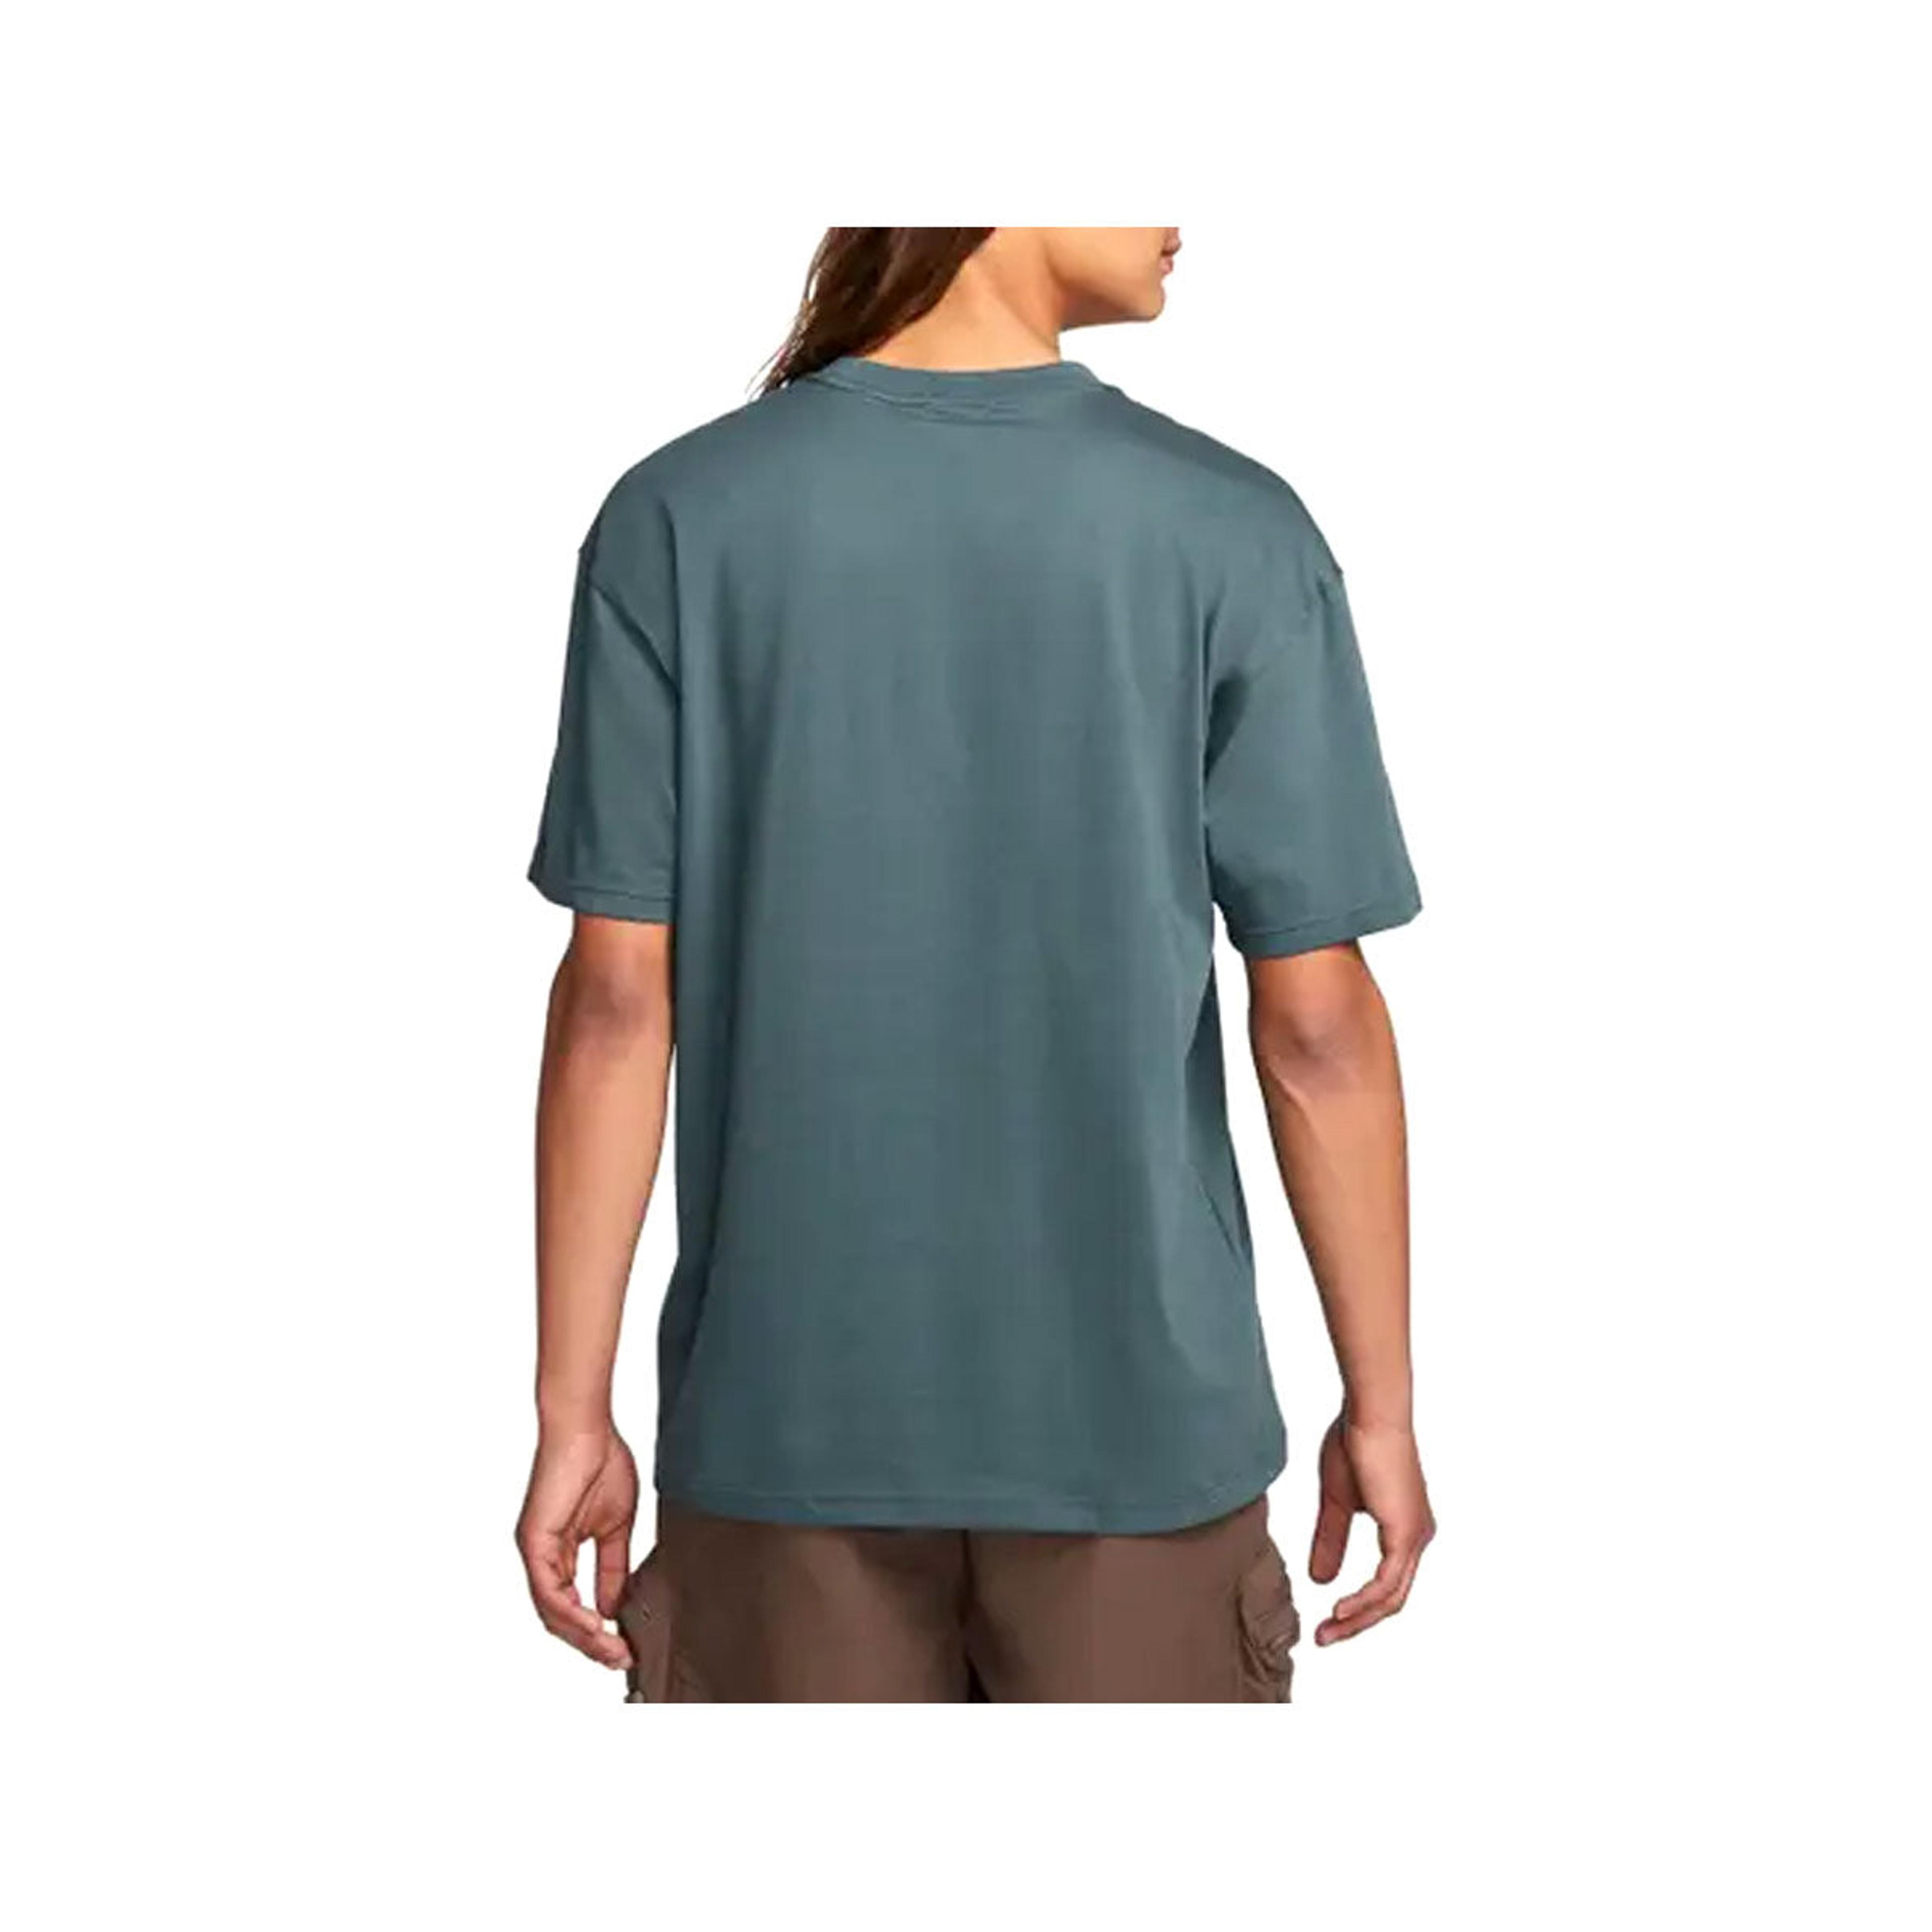 Alternate View 1 of Nike Men's ACG Patch T-Shirt